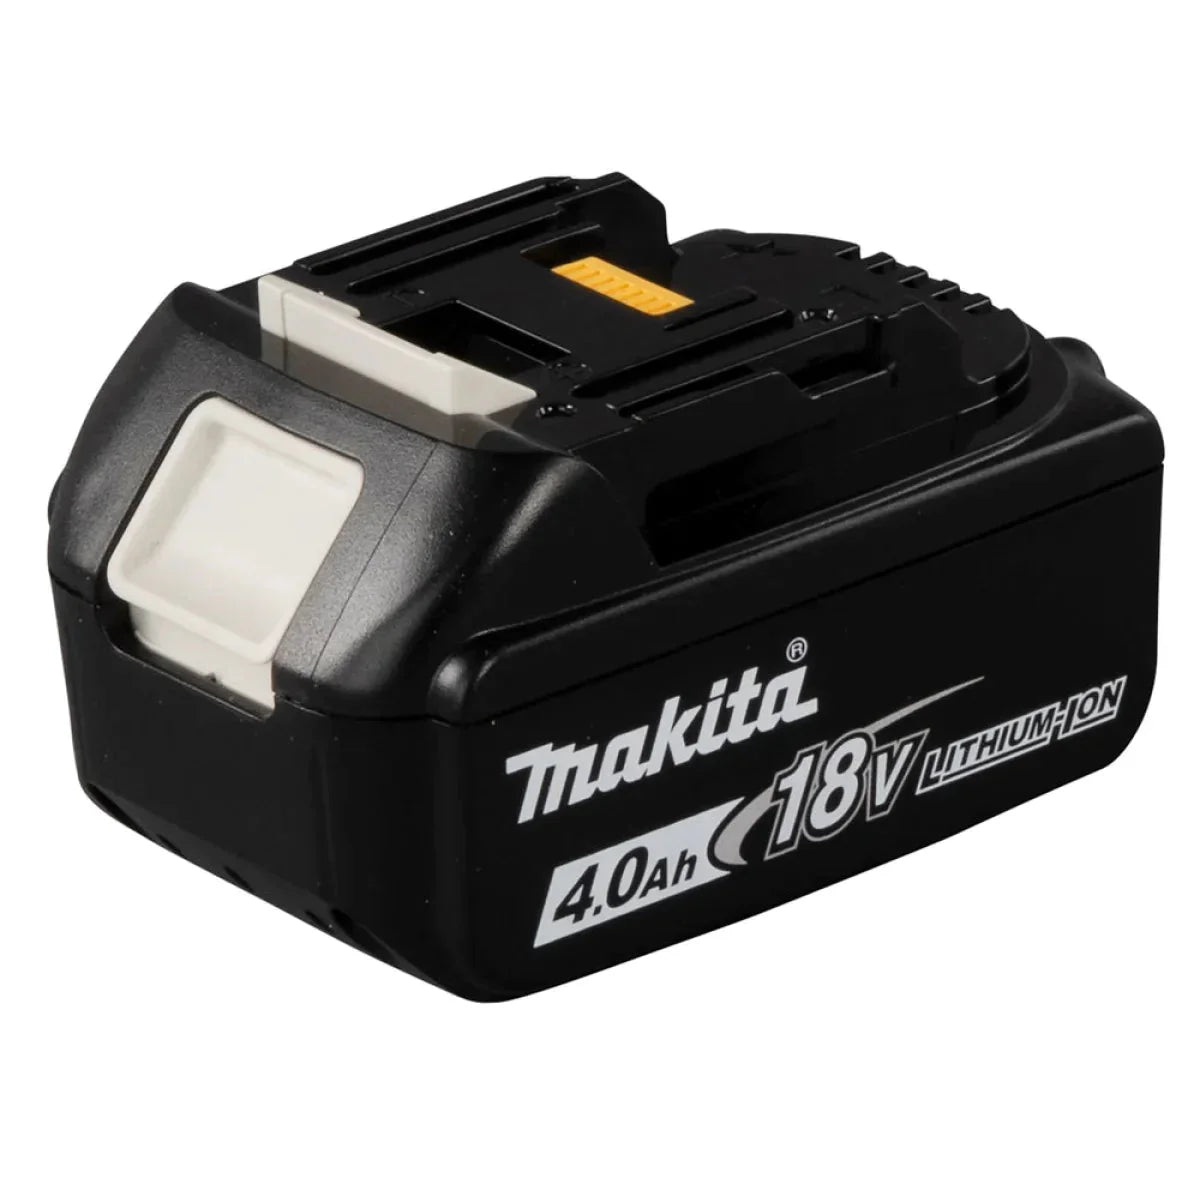 Makita-BL1840B 18V - 4.0Ah-Werkzeug-Akku 18V-Masori.de